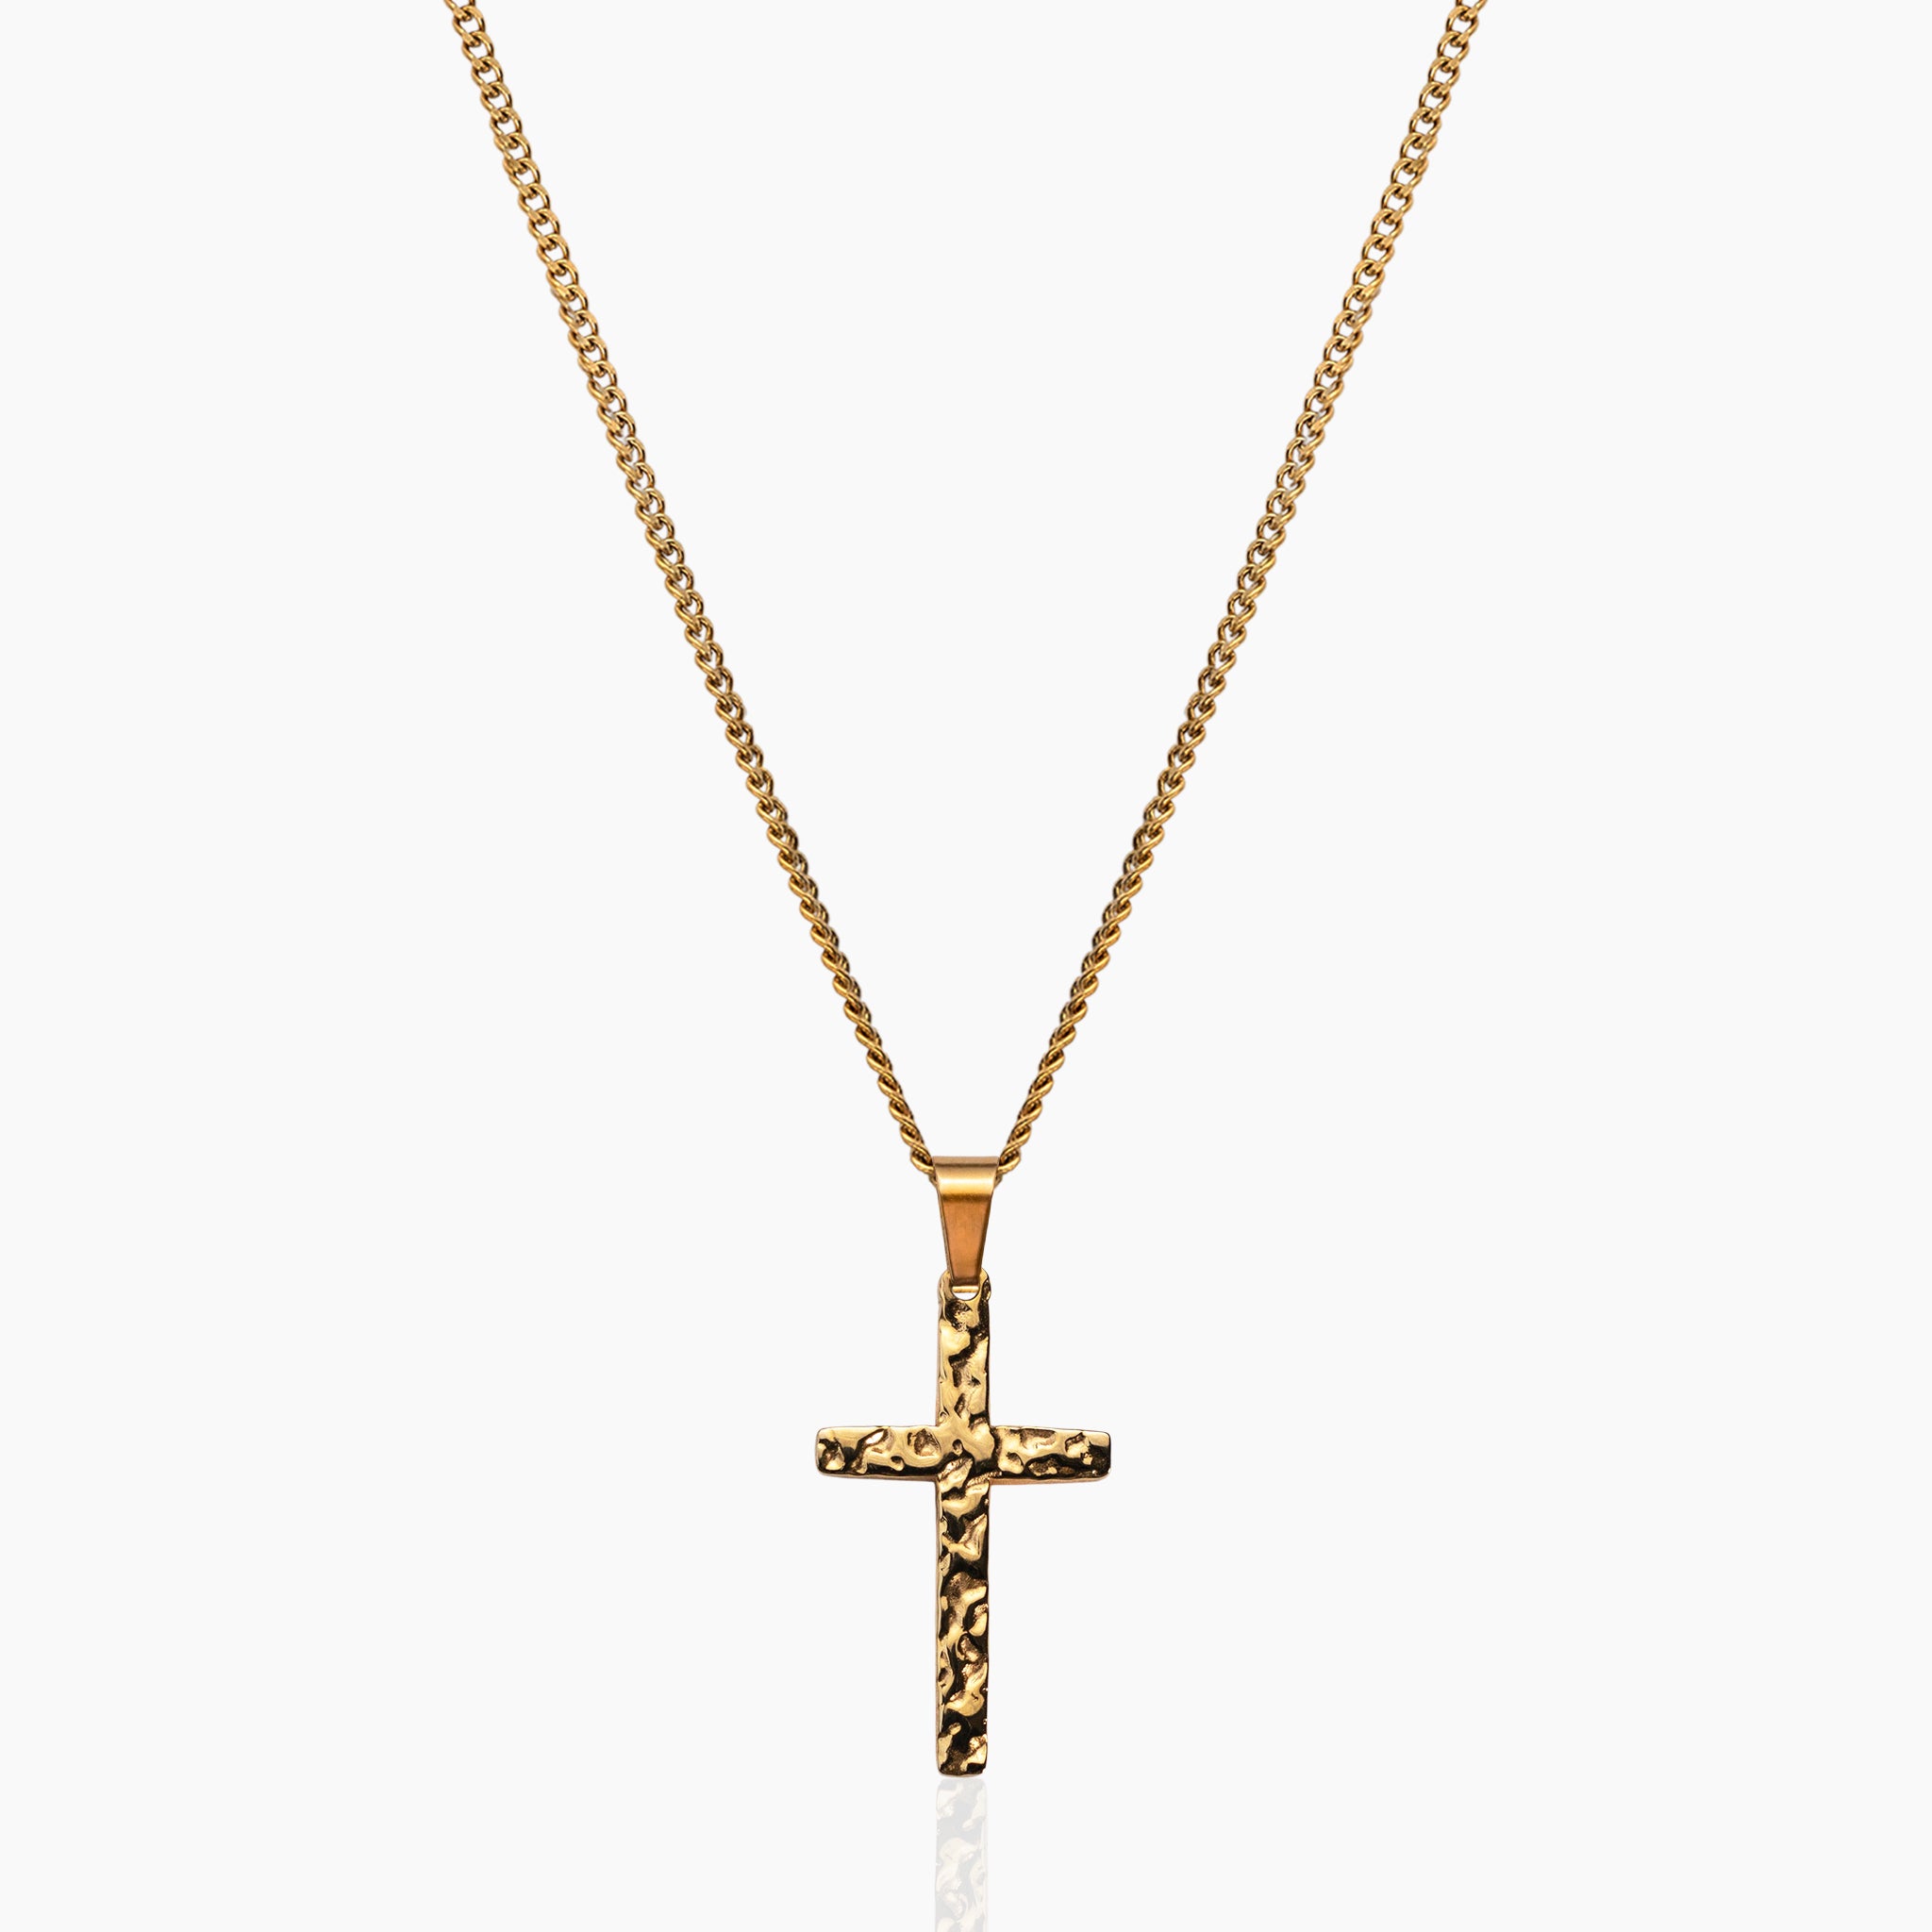 Rugged Cross Pendant - Gold